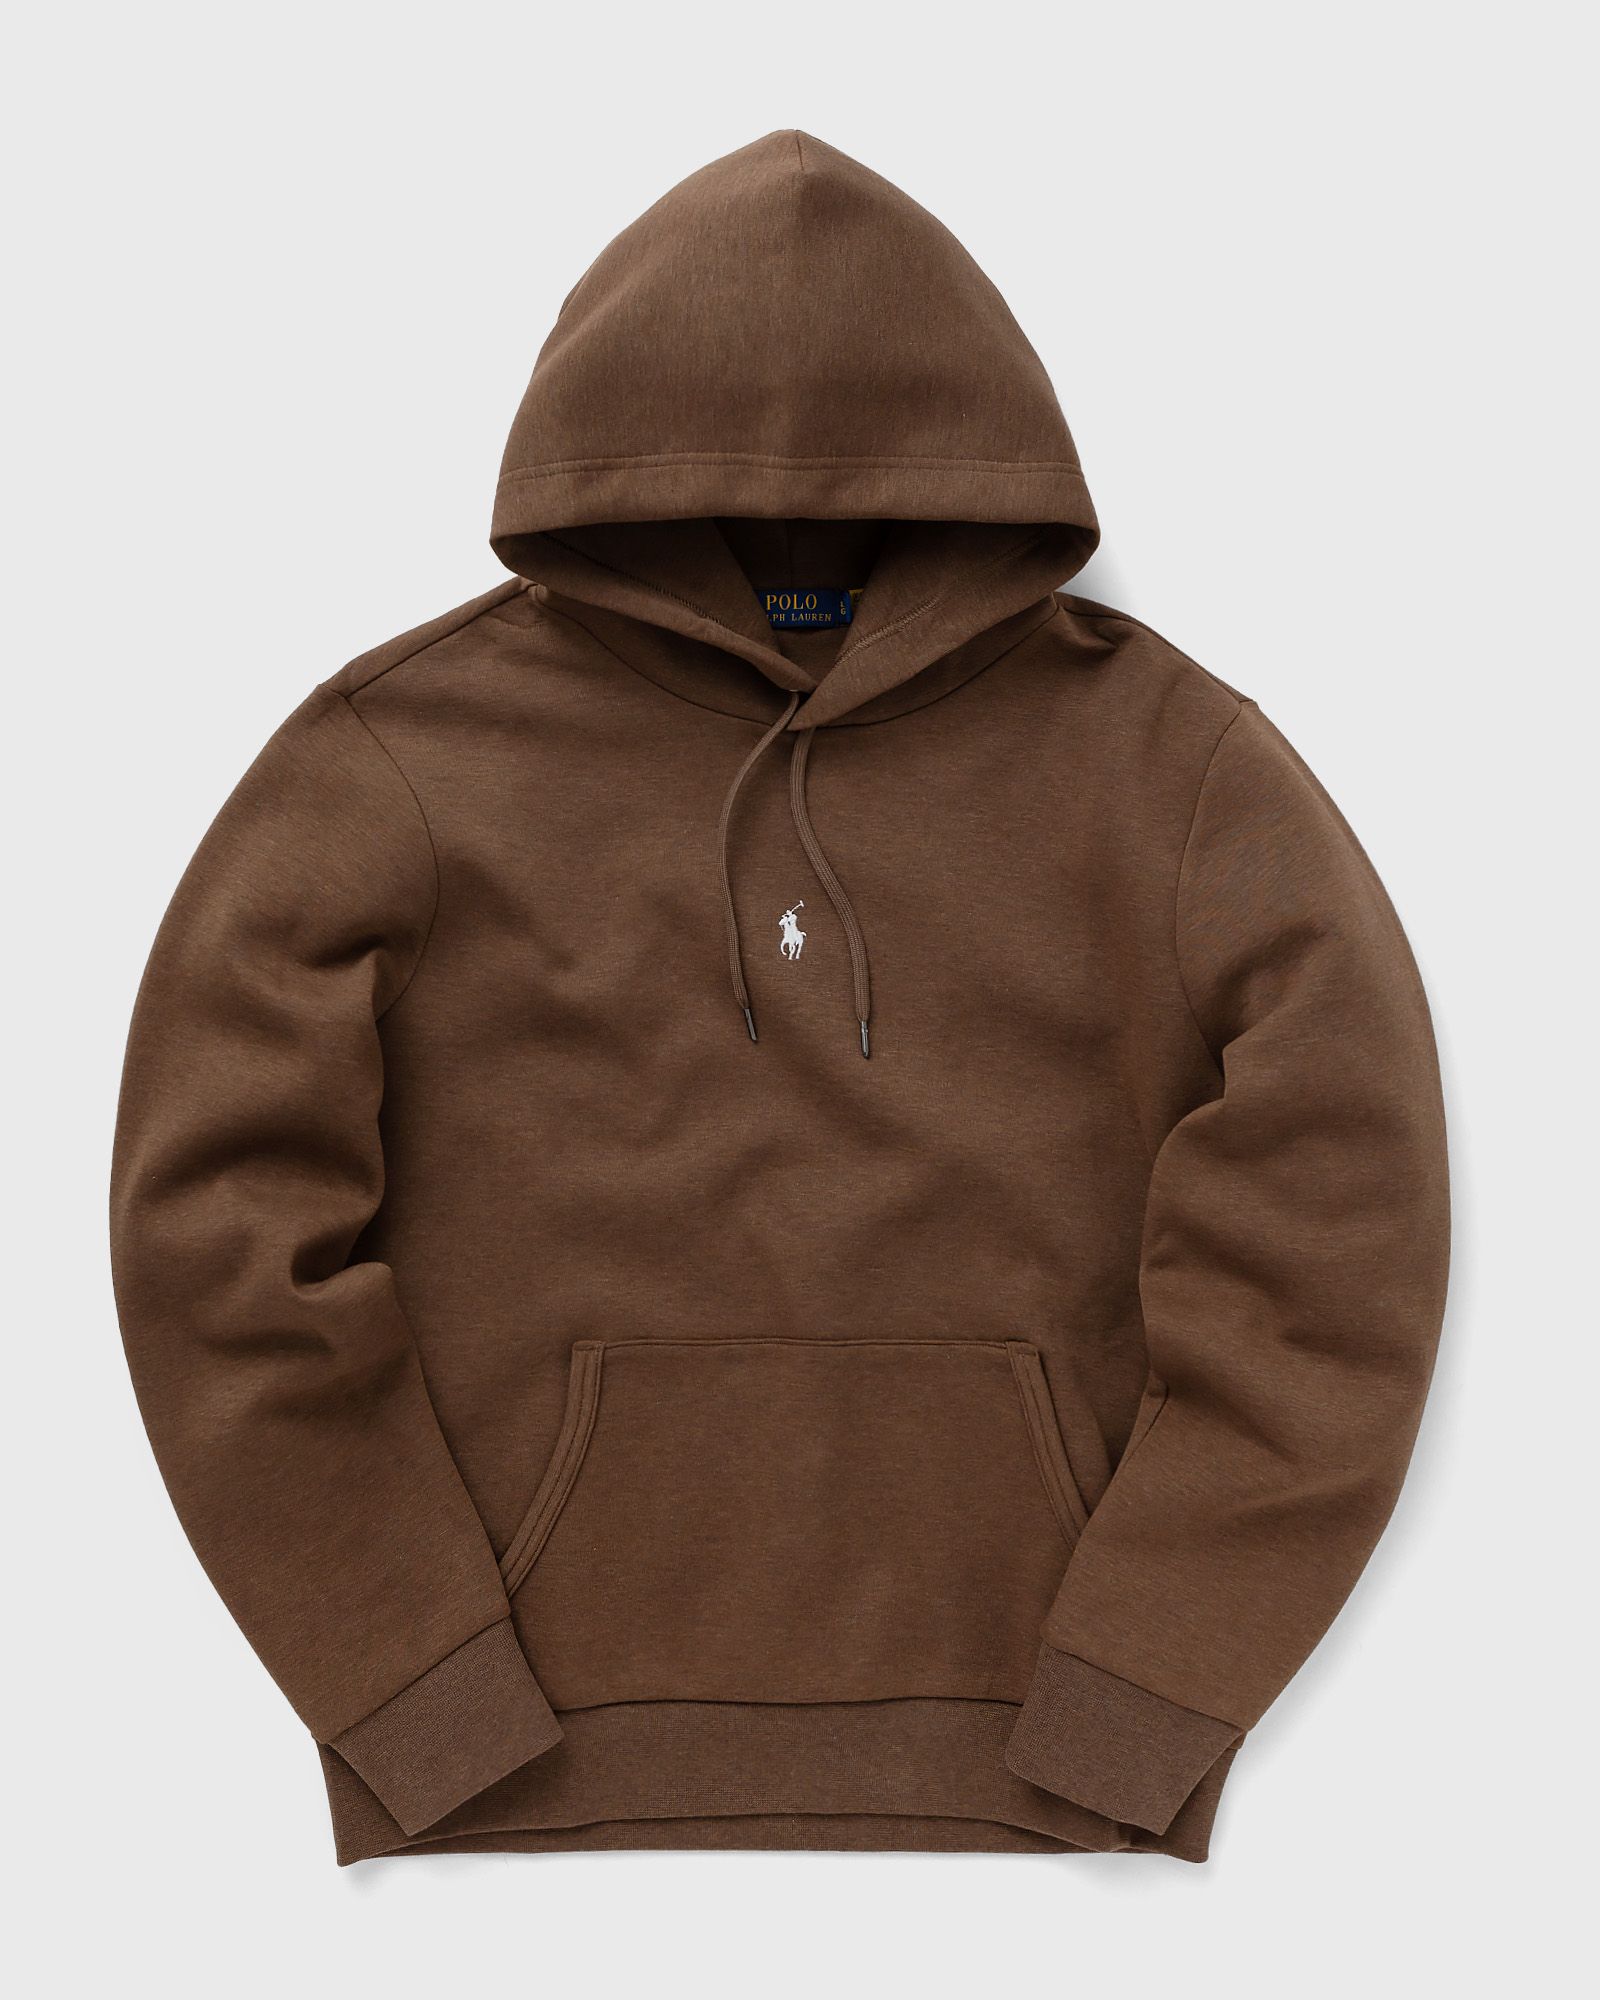 Polo Ralph Lauren - long sleeve-sweatshirt men hoodies brown in größe:xxl